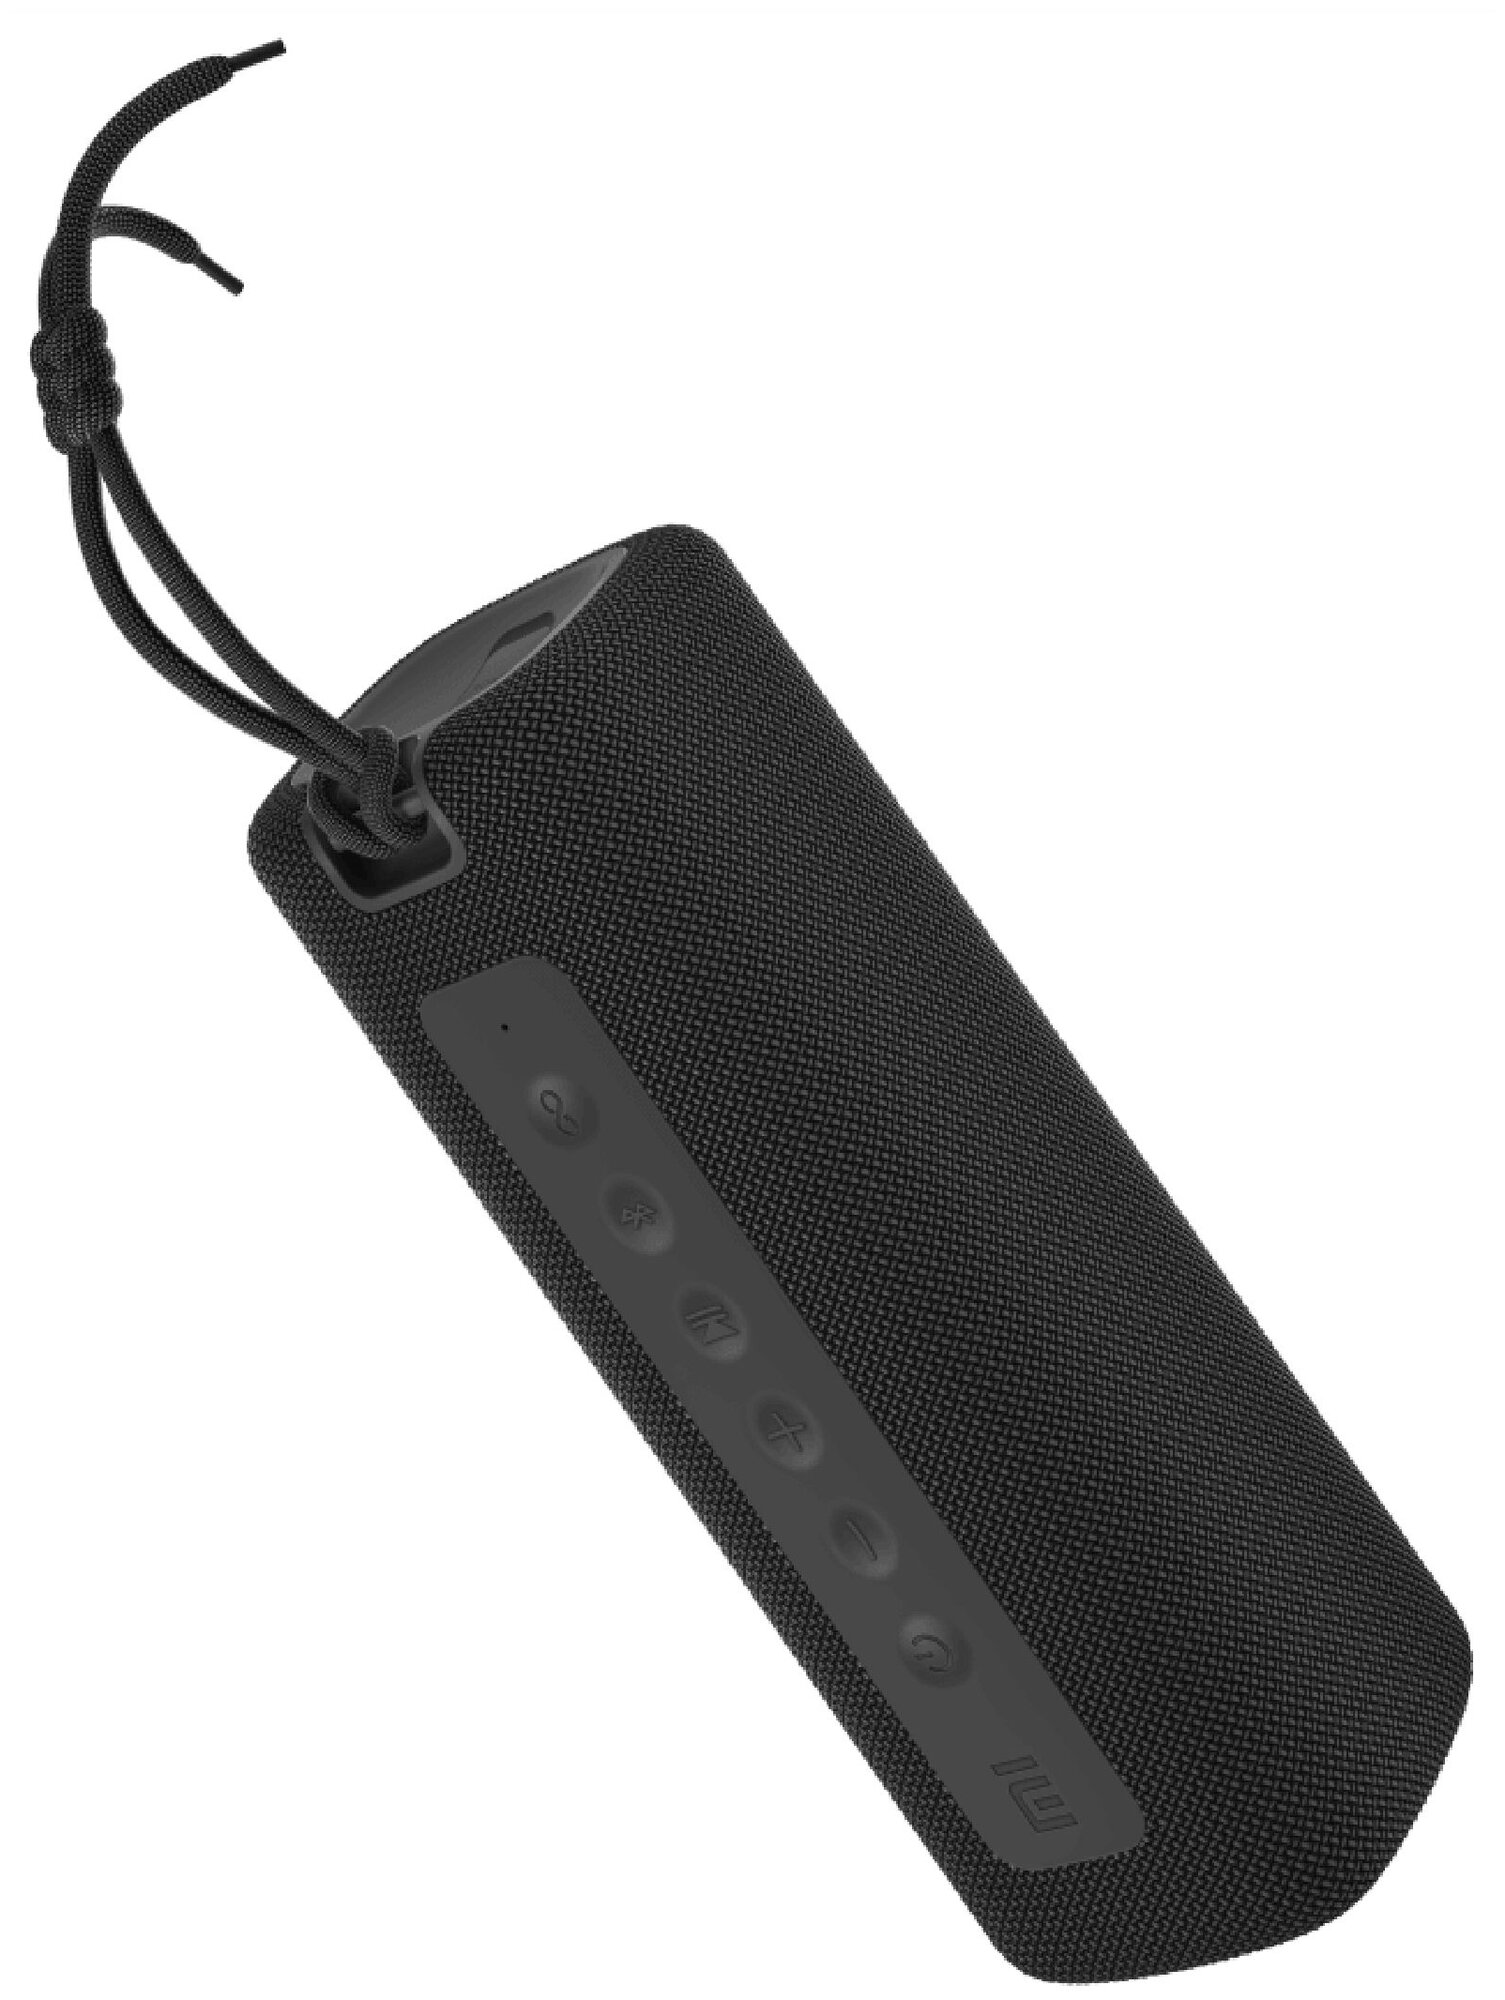 Портативная акустика Xiaomi Mi Portable Bluetooth Speaker 16 Вт